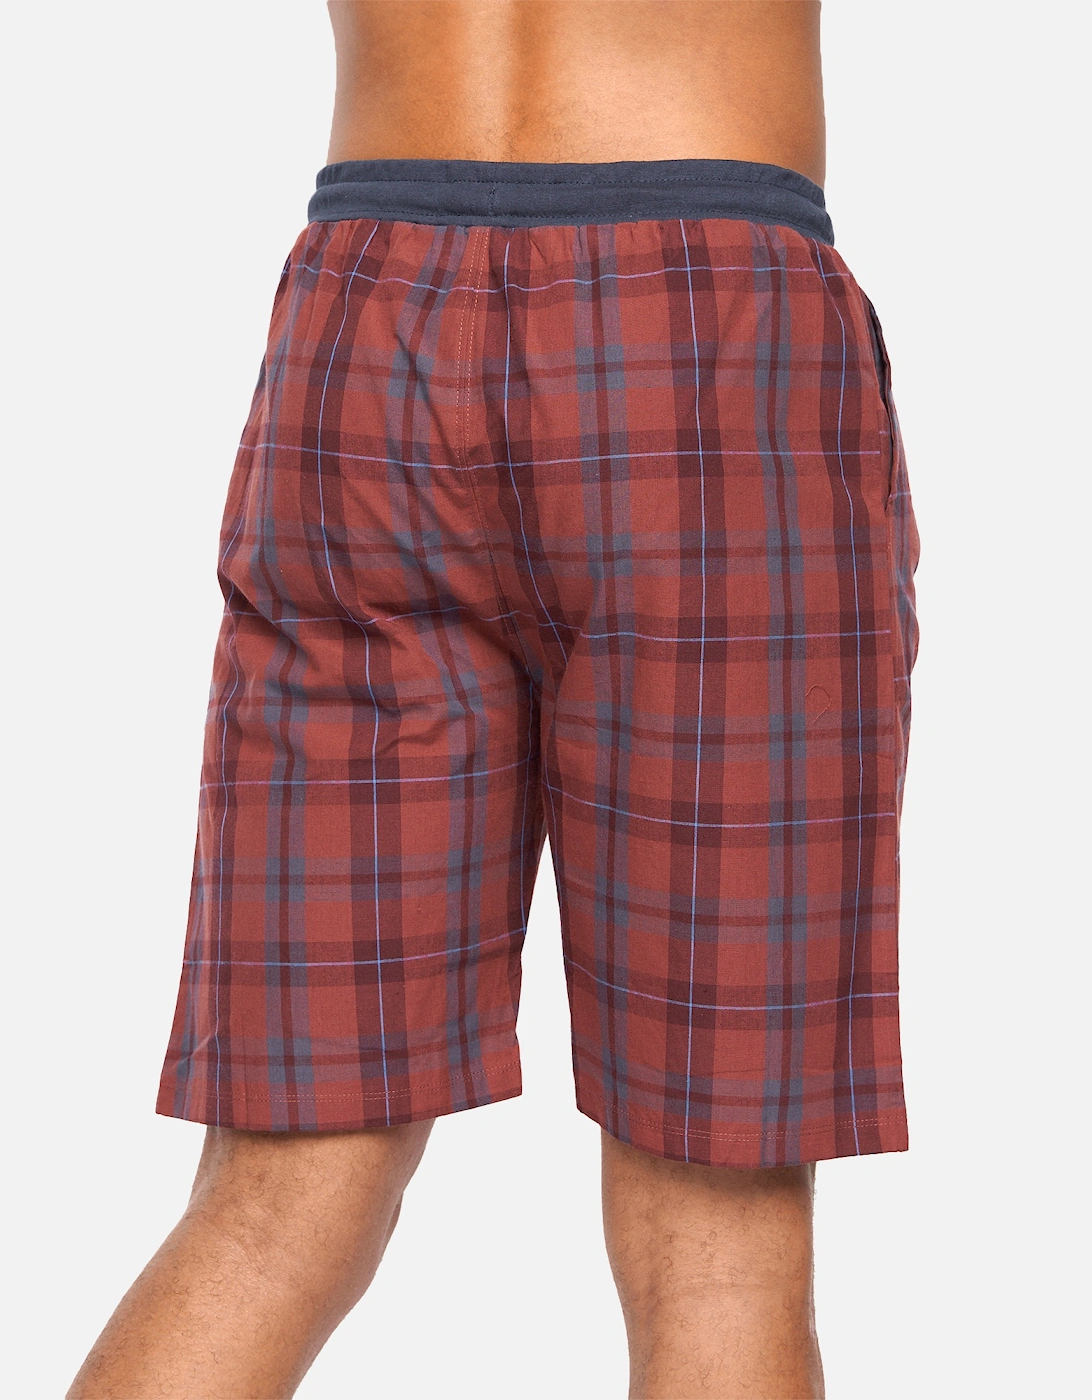 Mens Matharm Shorts (Pack of 2)